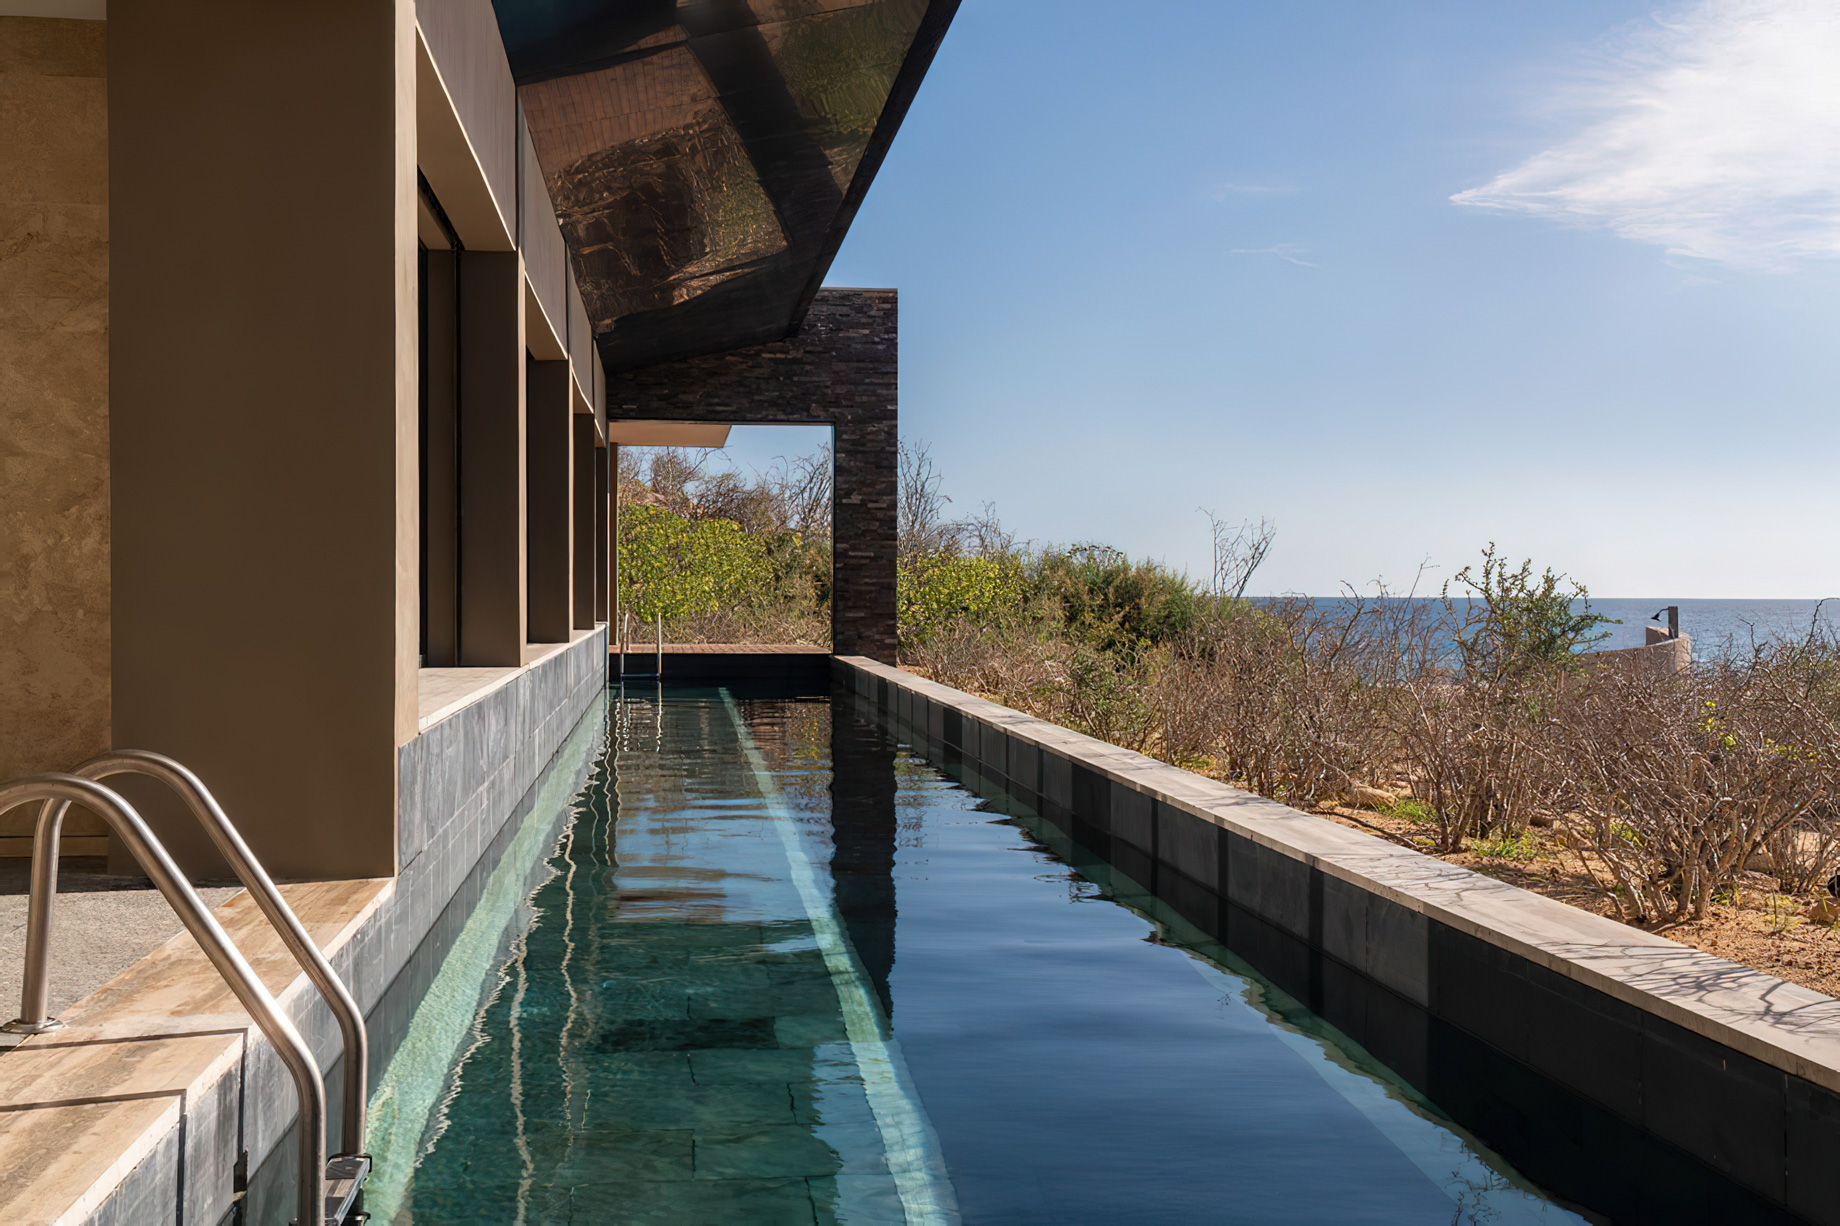 The Ritz-Carlton, Zadun Reserve Resort - Los Cabos, Mexico - Fitness Center Lap Pool